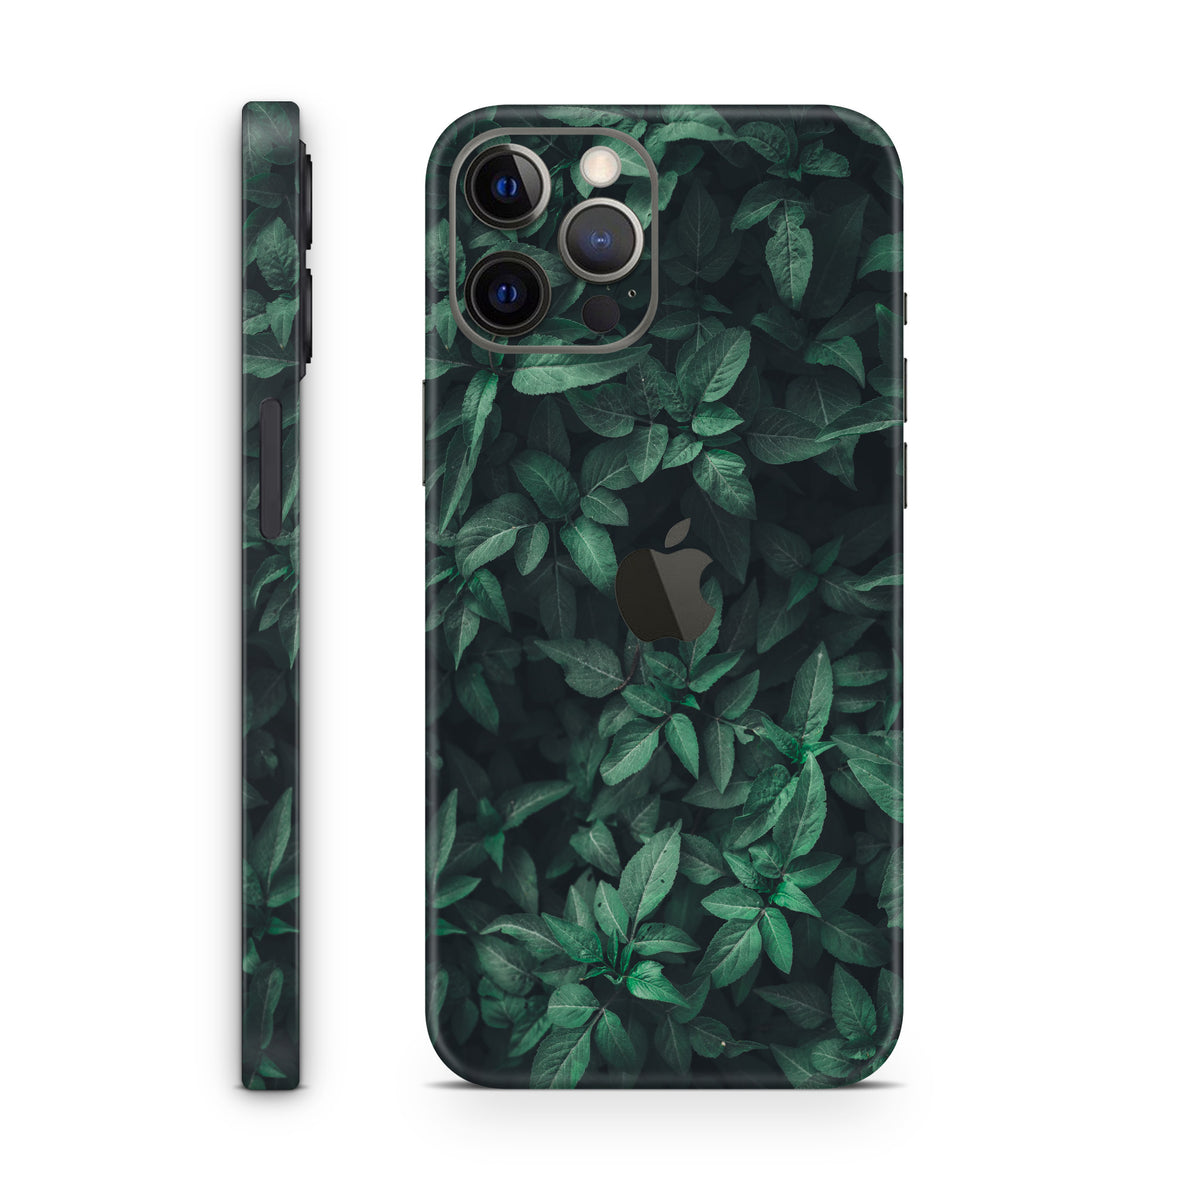 Evergreen (iPhone Skin)